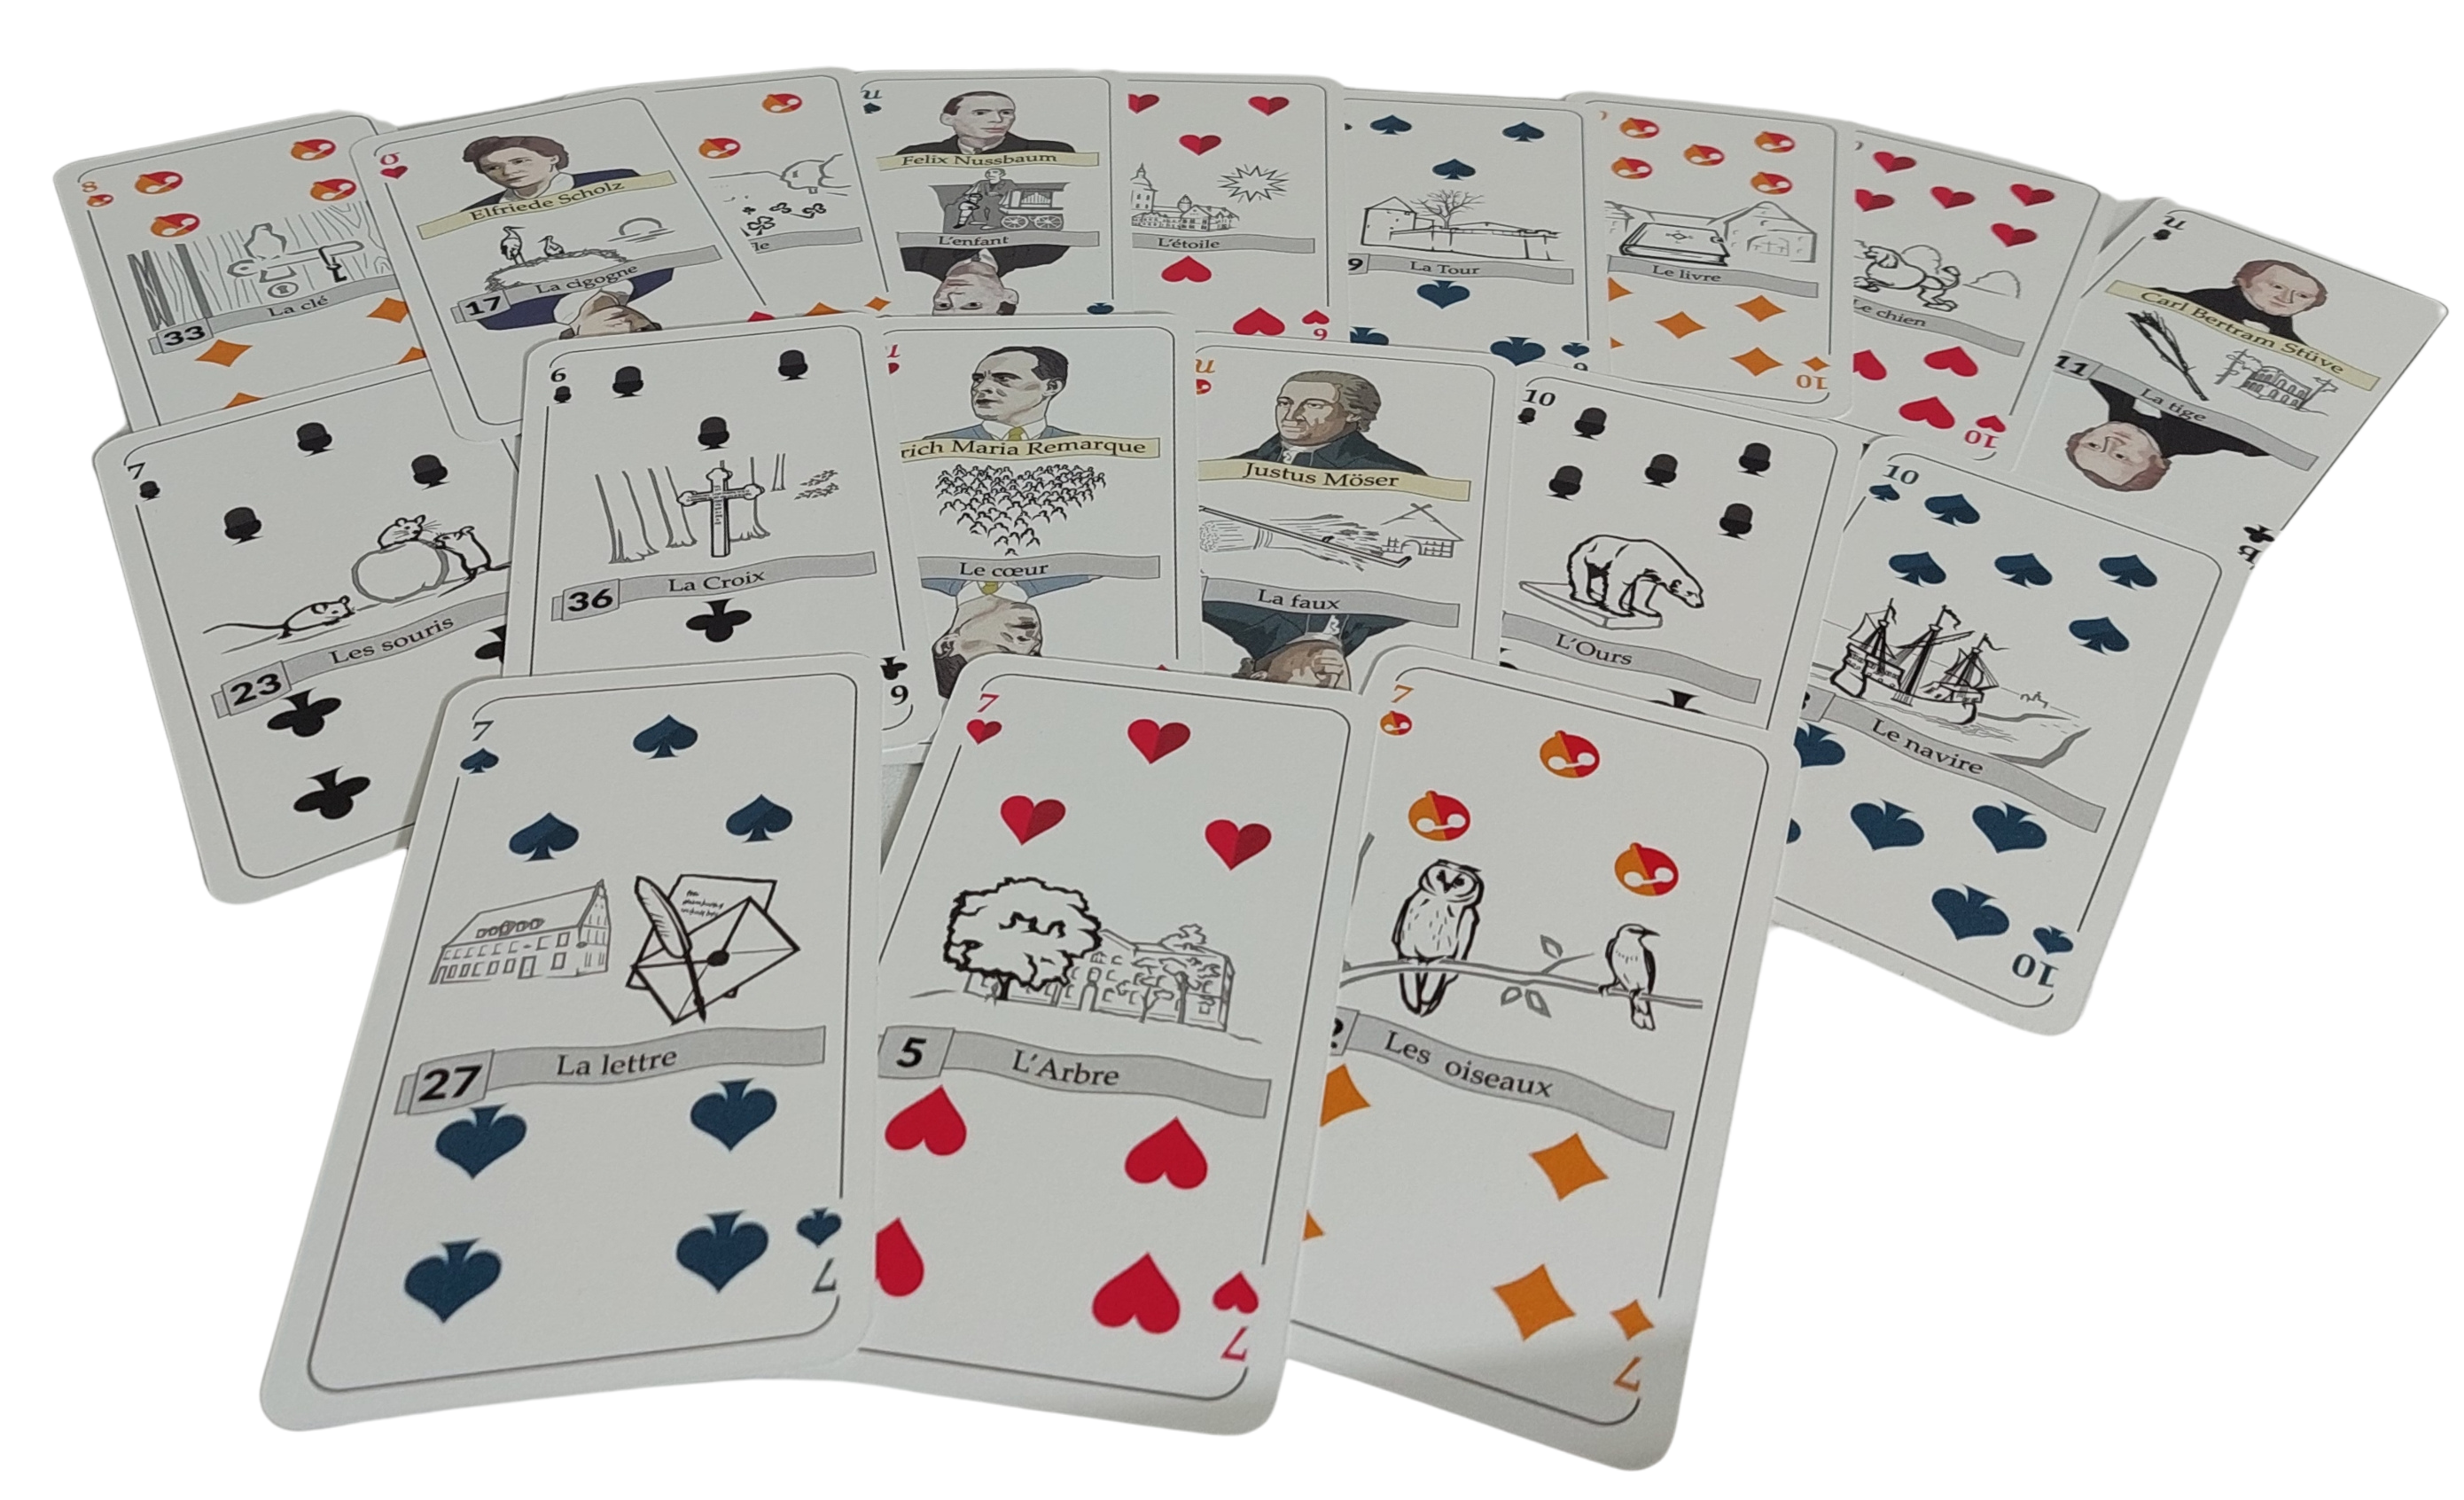 Spiel: Osnabrücker Kartenspiel